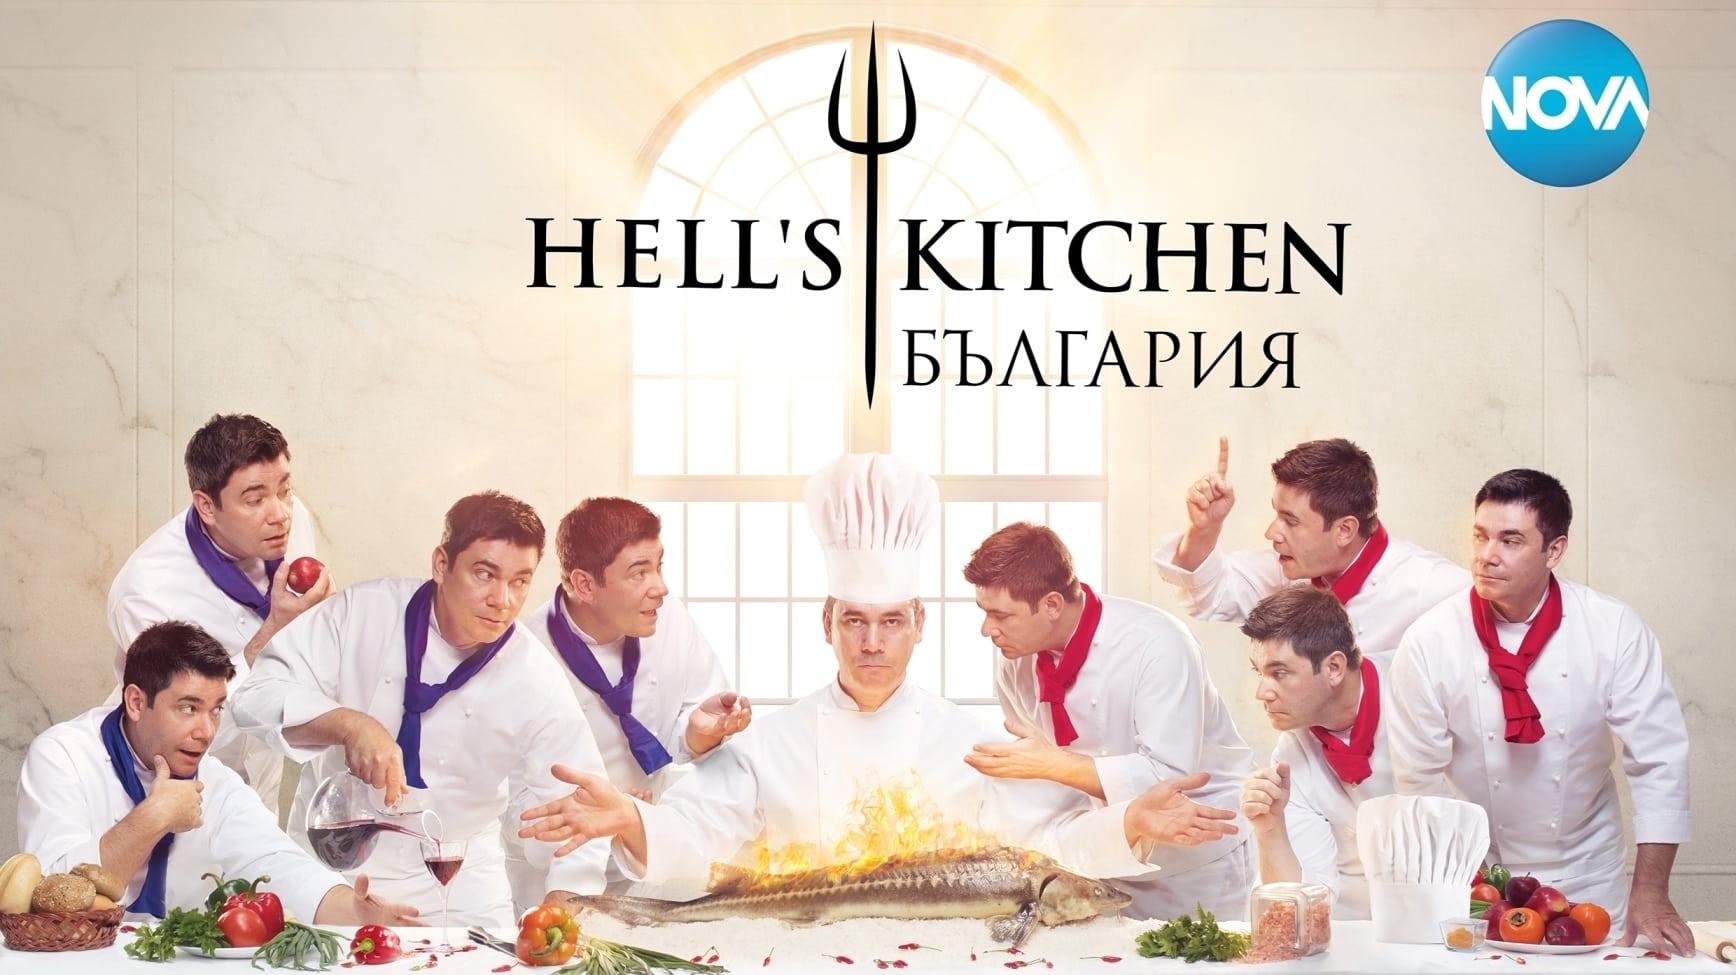 Hell's Kitchen Bulgaria backdrop